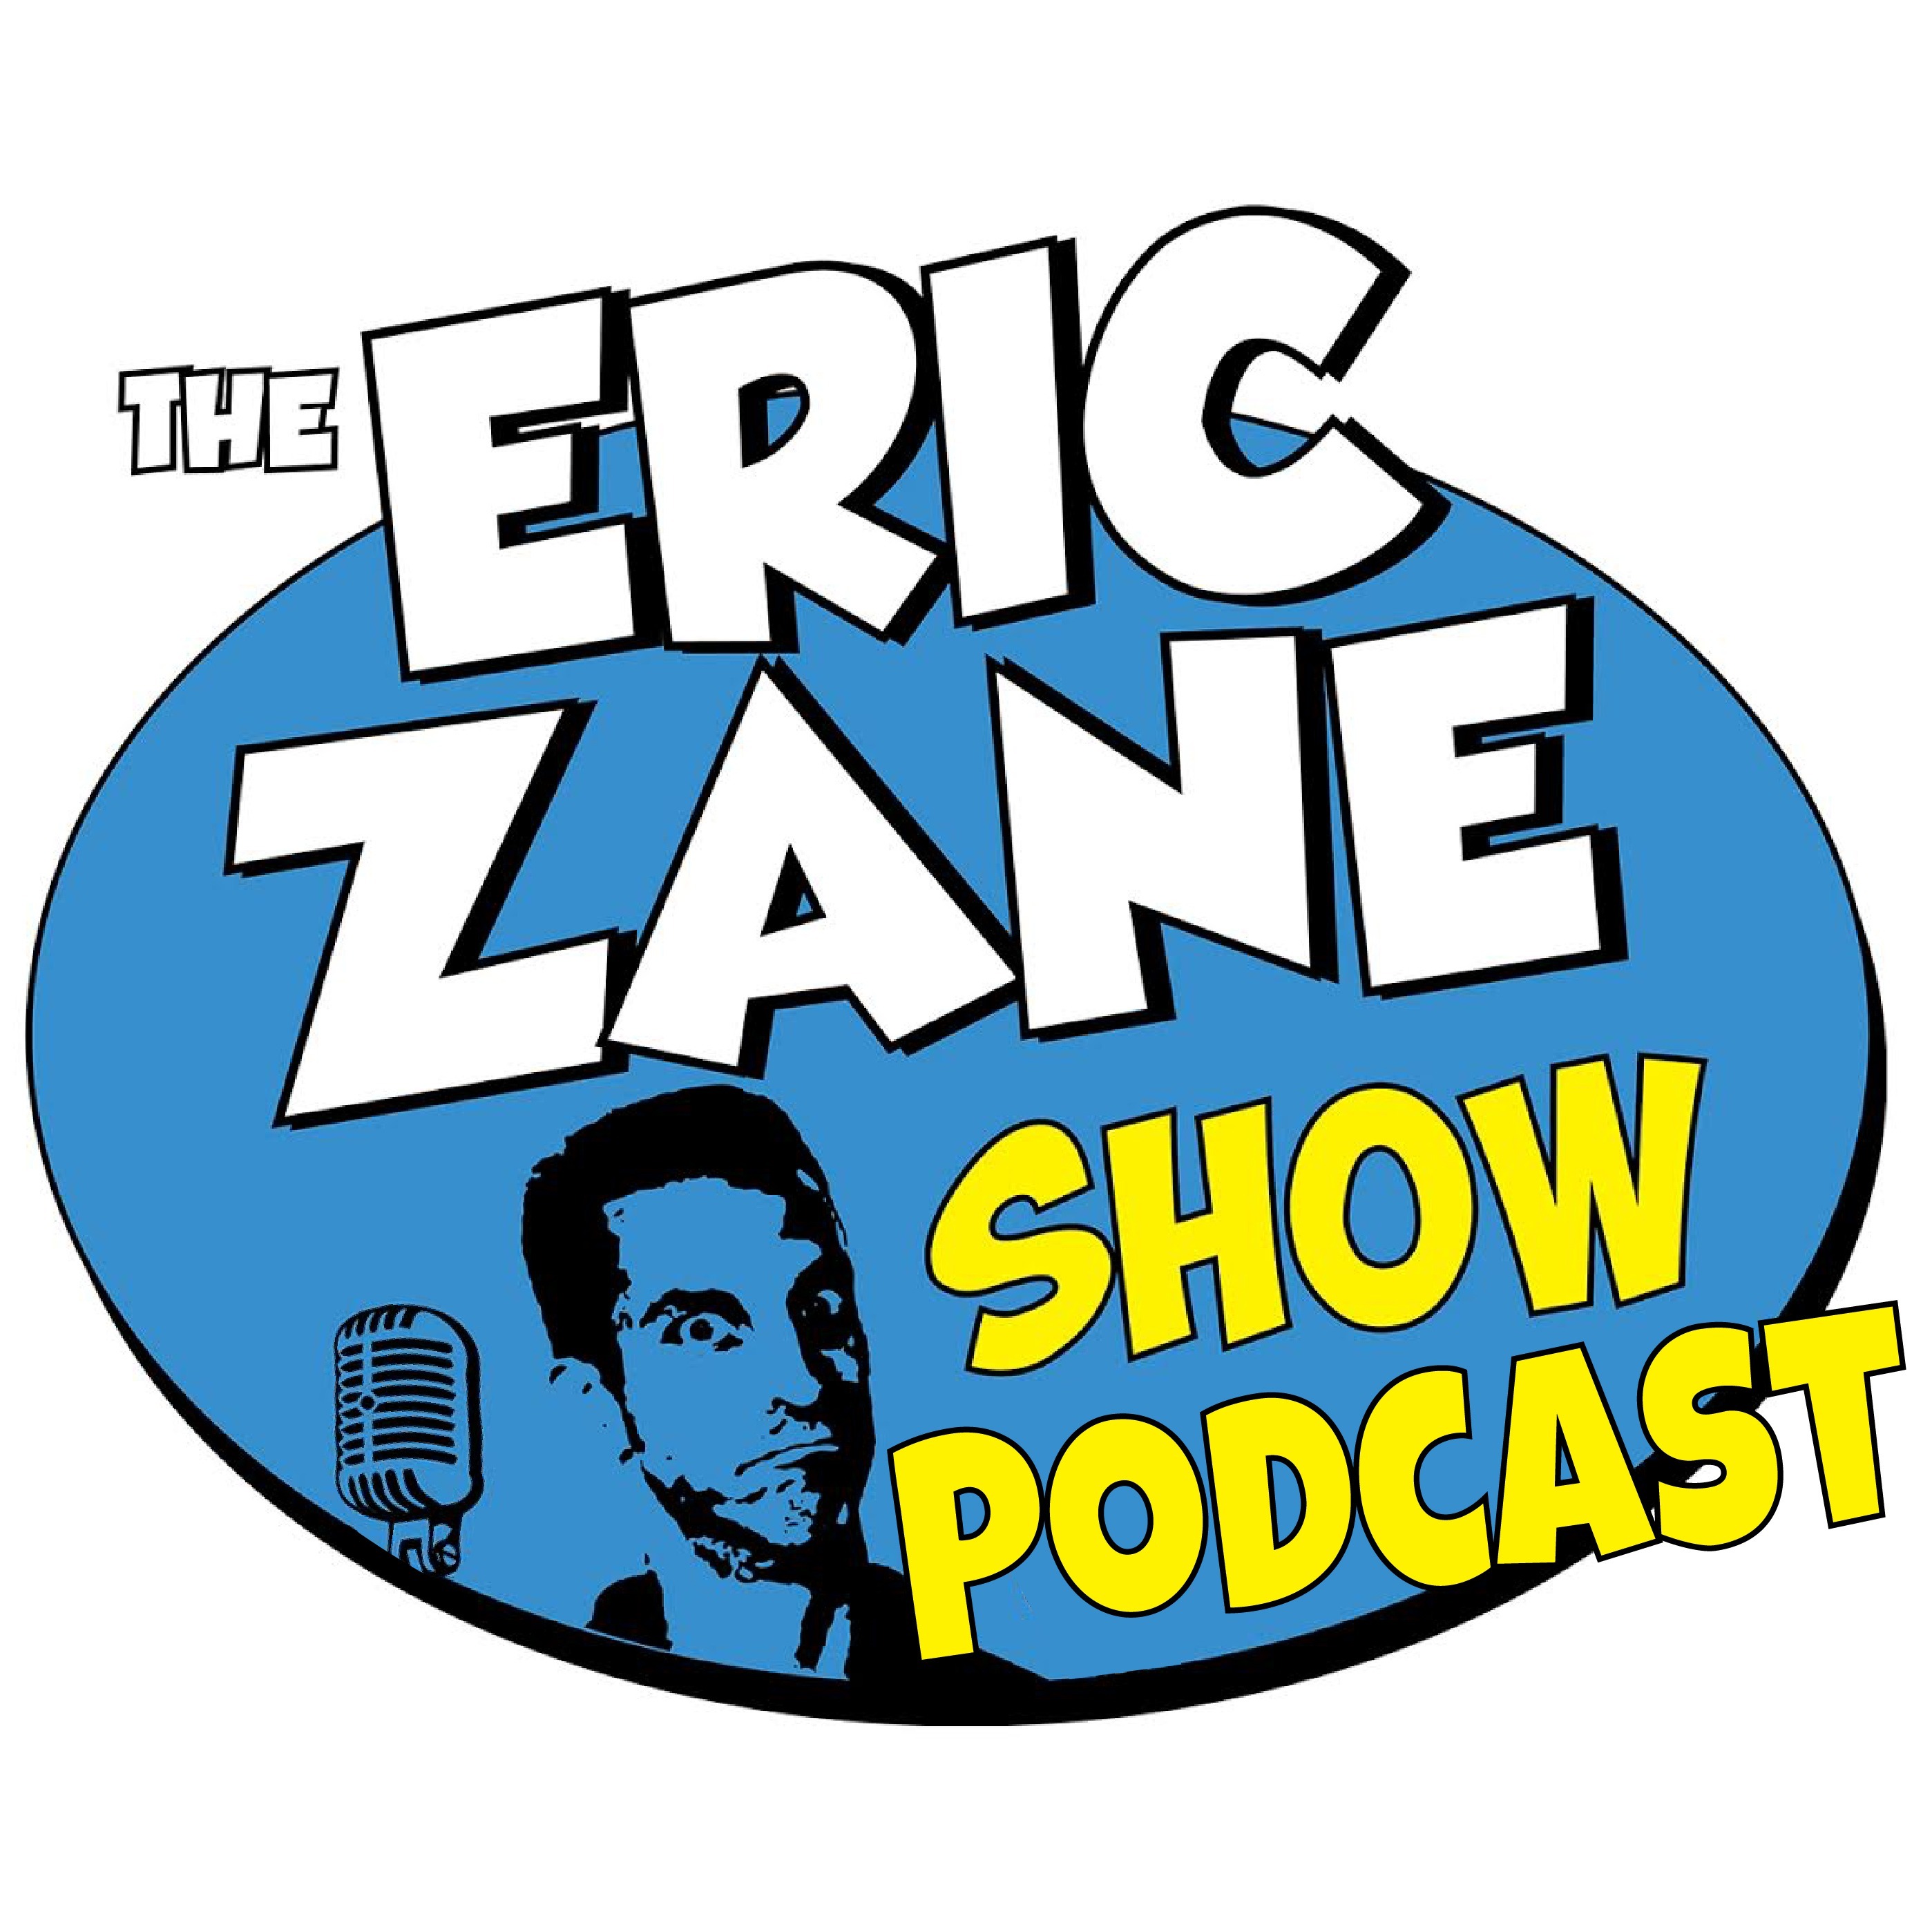 Eric Zane Show Podcast 871 She's got a mustache